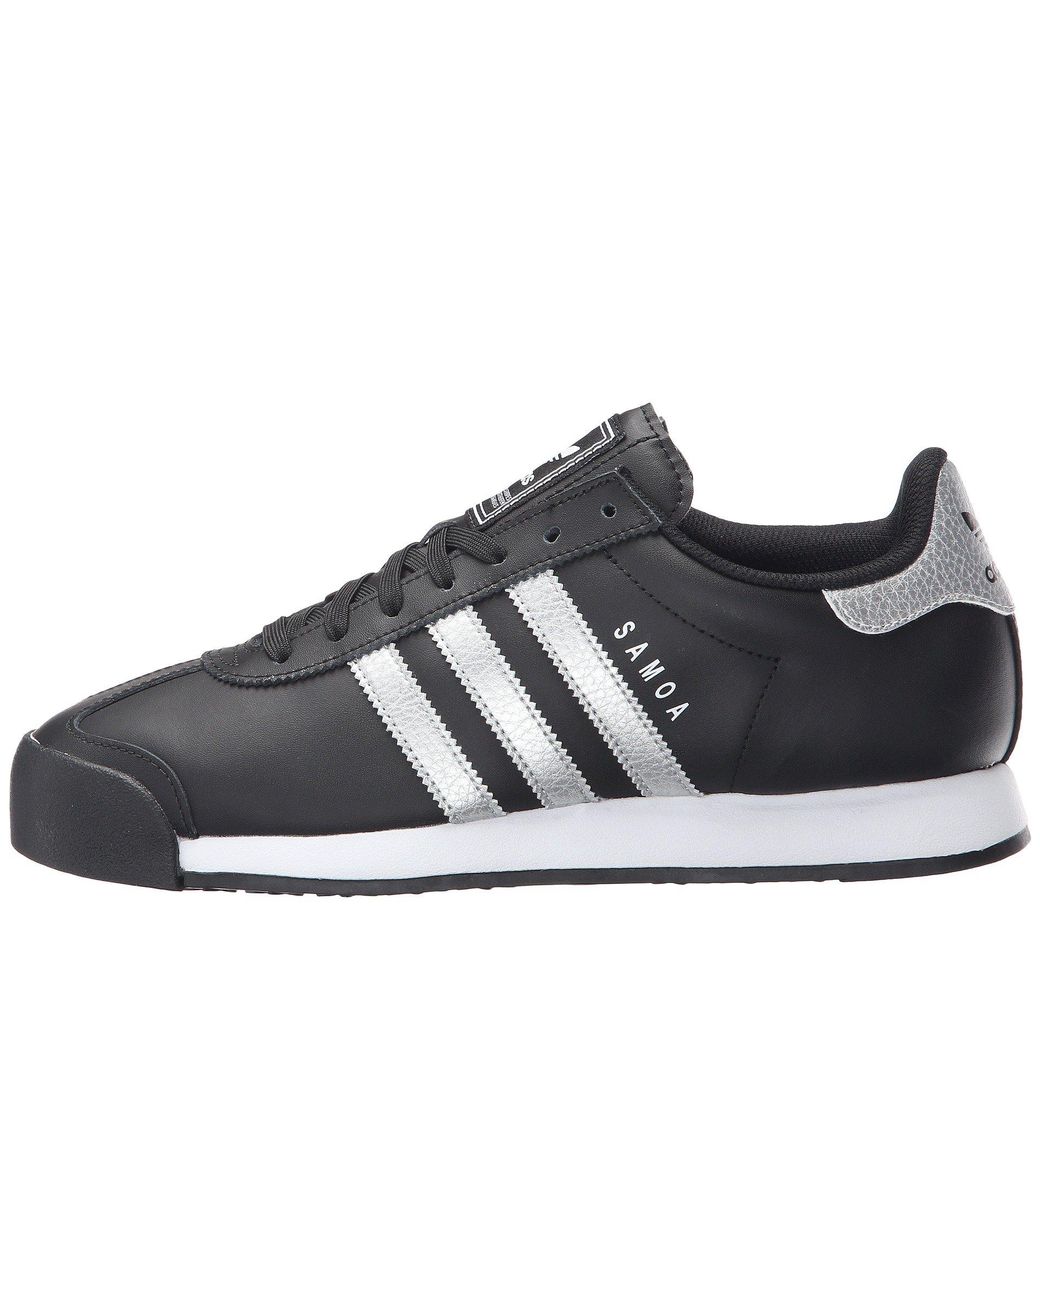 adidas Originals Samoa Leather (core Black/silver Metallic/white) Men's  Tennis Shoes for Men | Lyst